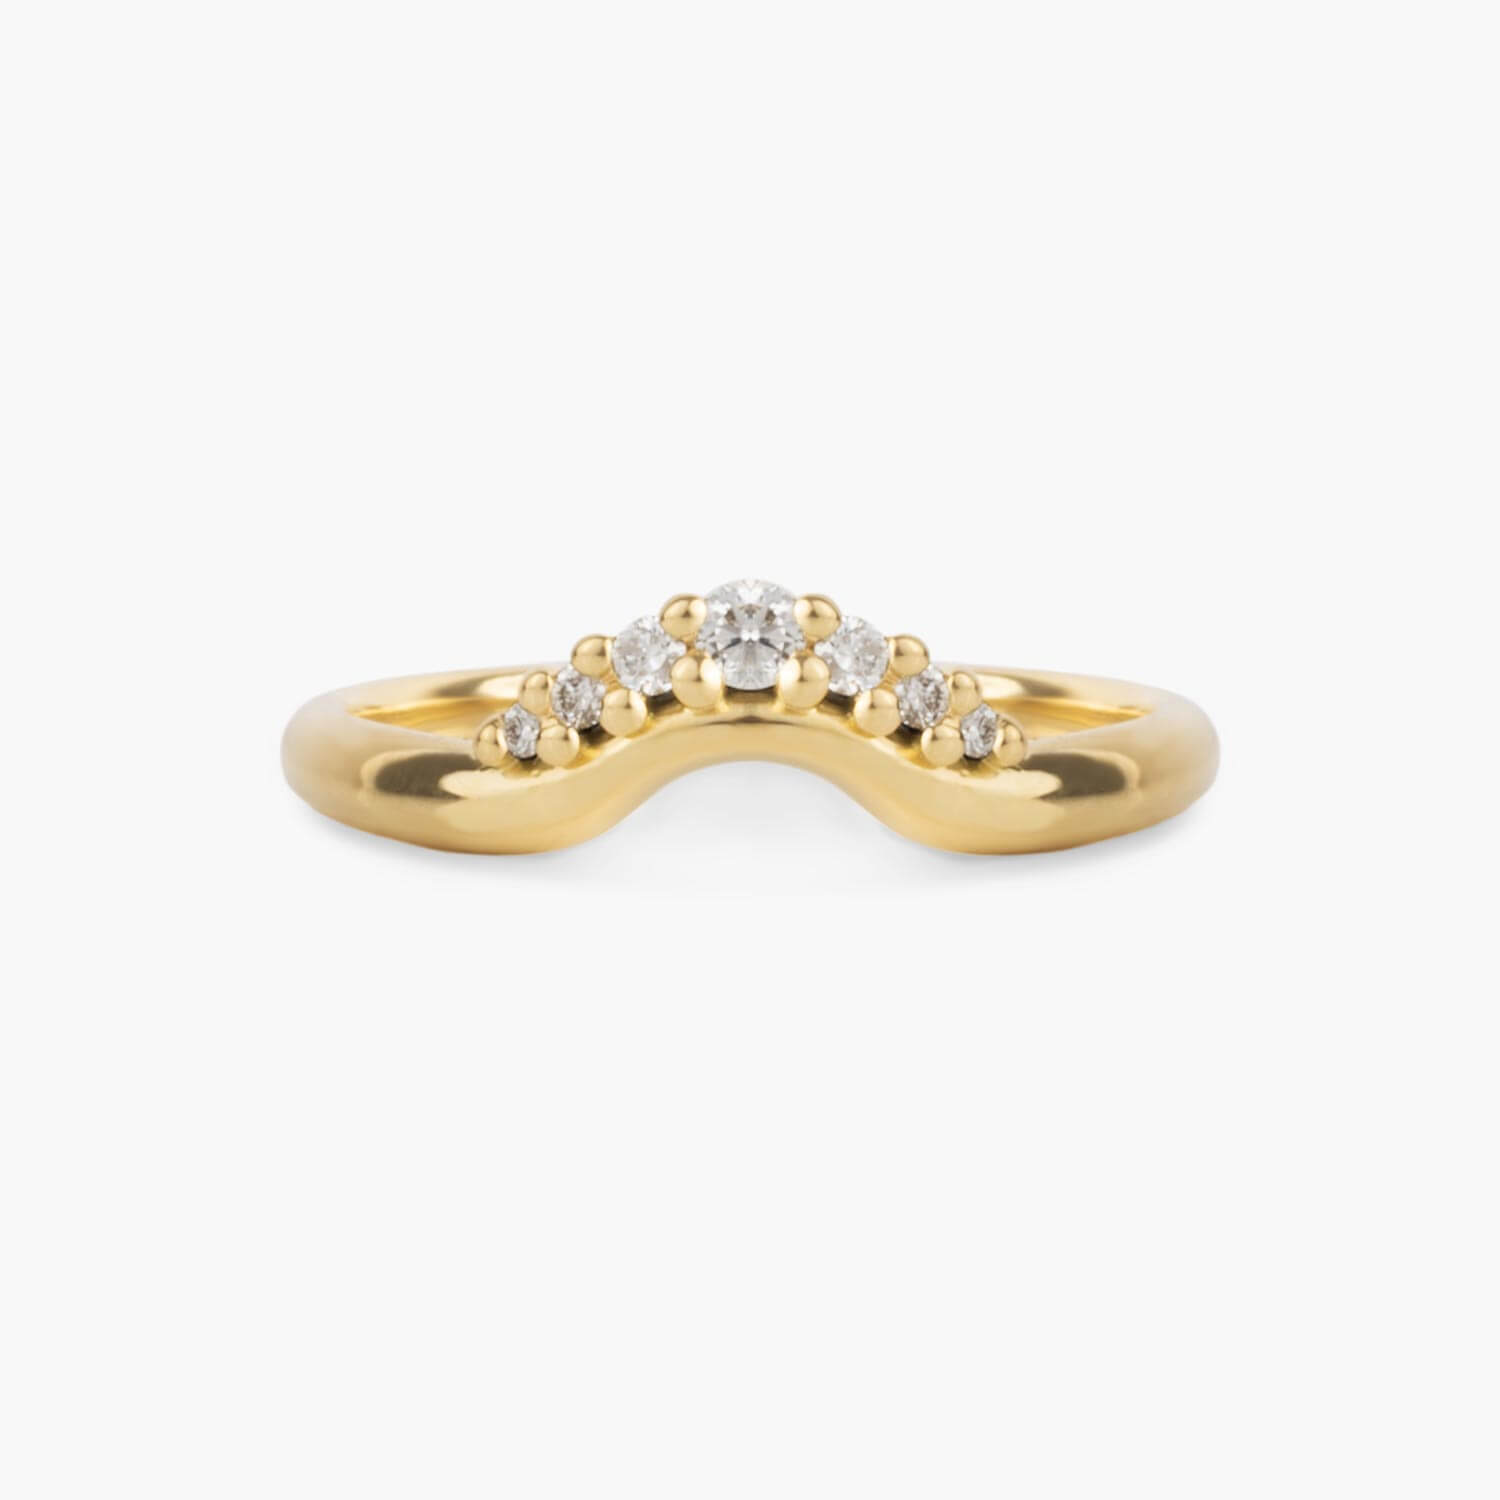 Bespoke Shaped Diamond Wedding Ring